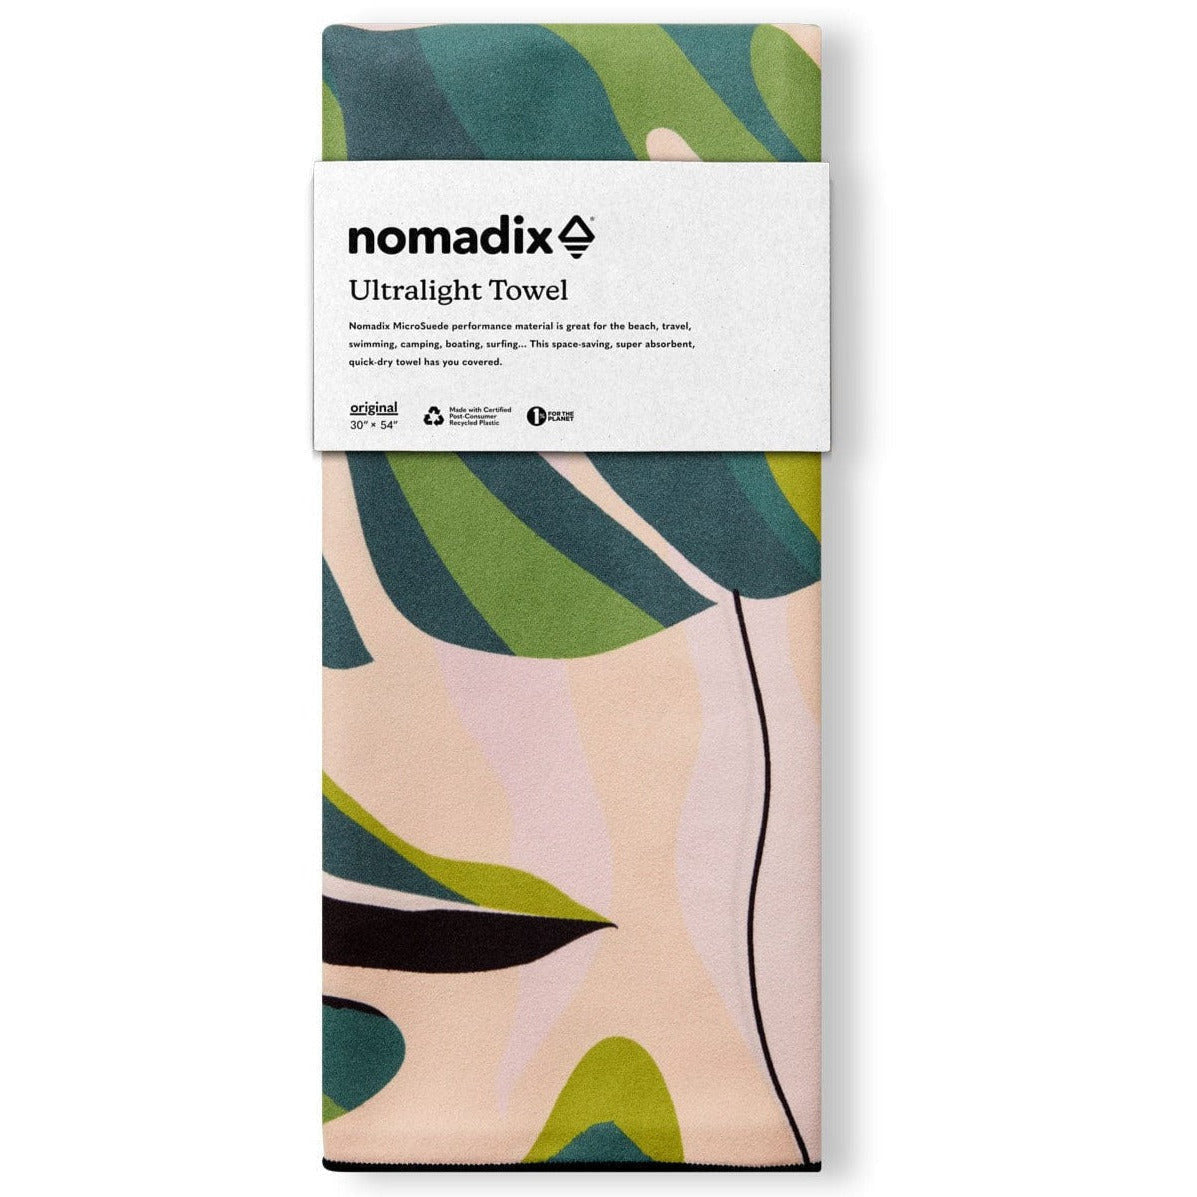 Nomadix Ultralight Towel  - 